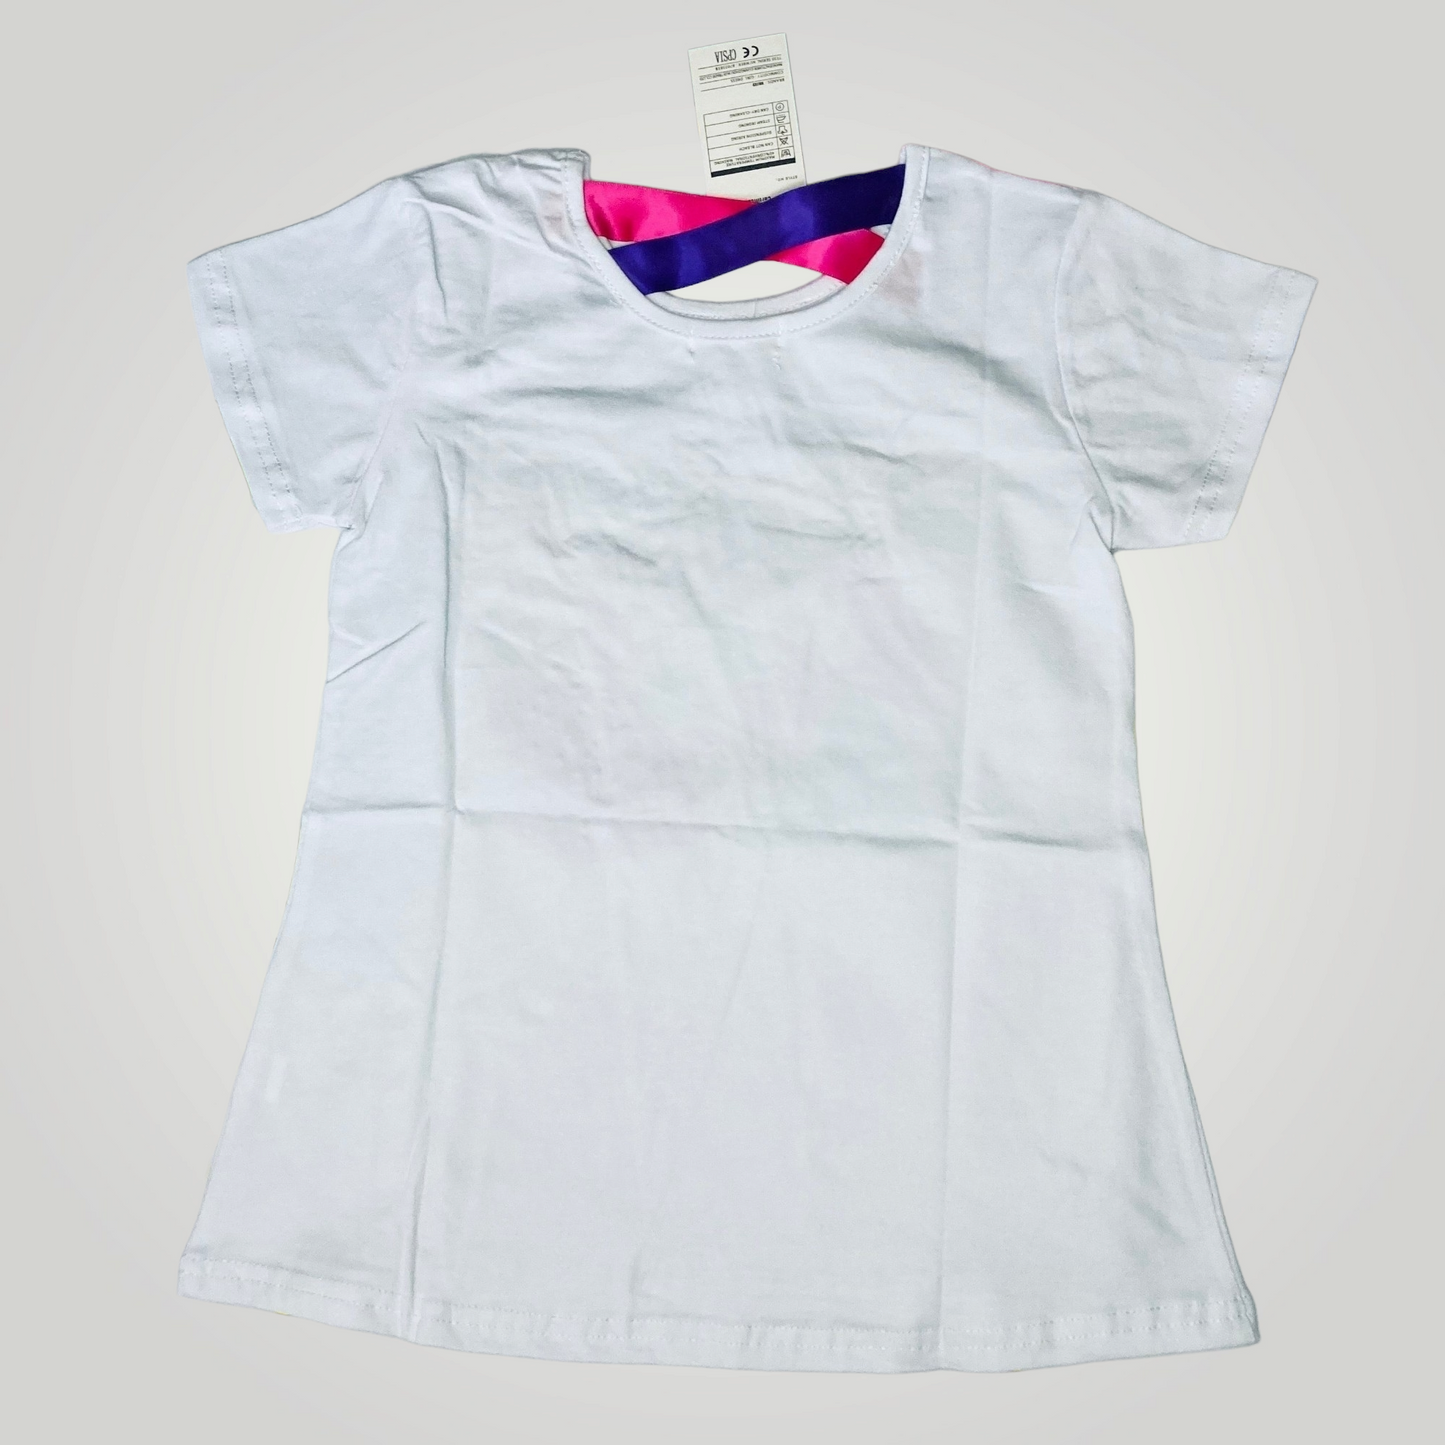 Sammie Jo Watercolor Unicorn T-Shirt